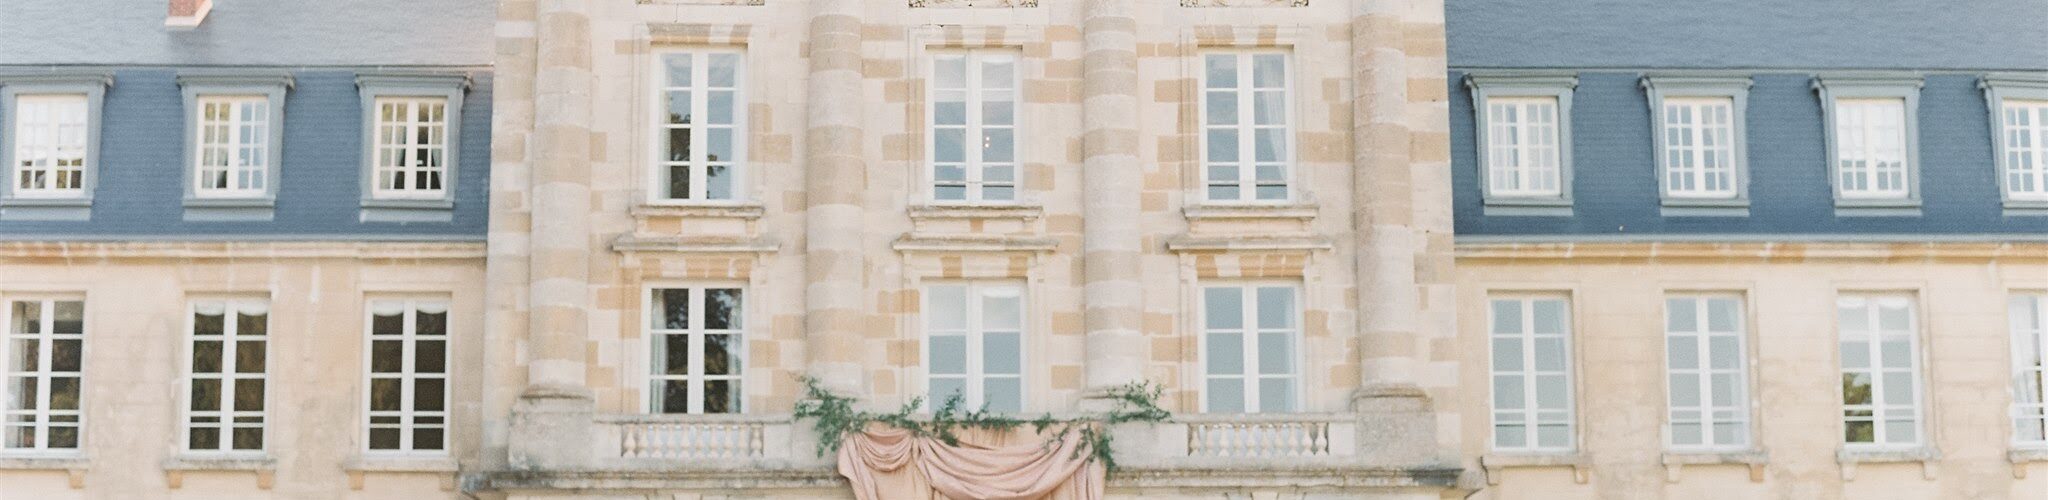 Chateau de courtomer french wedding venue